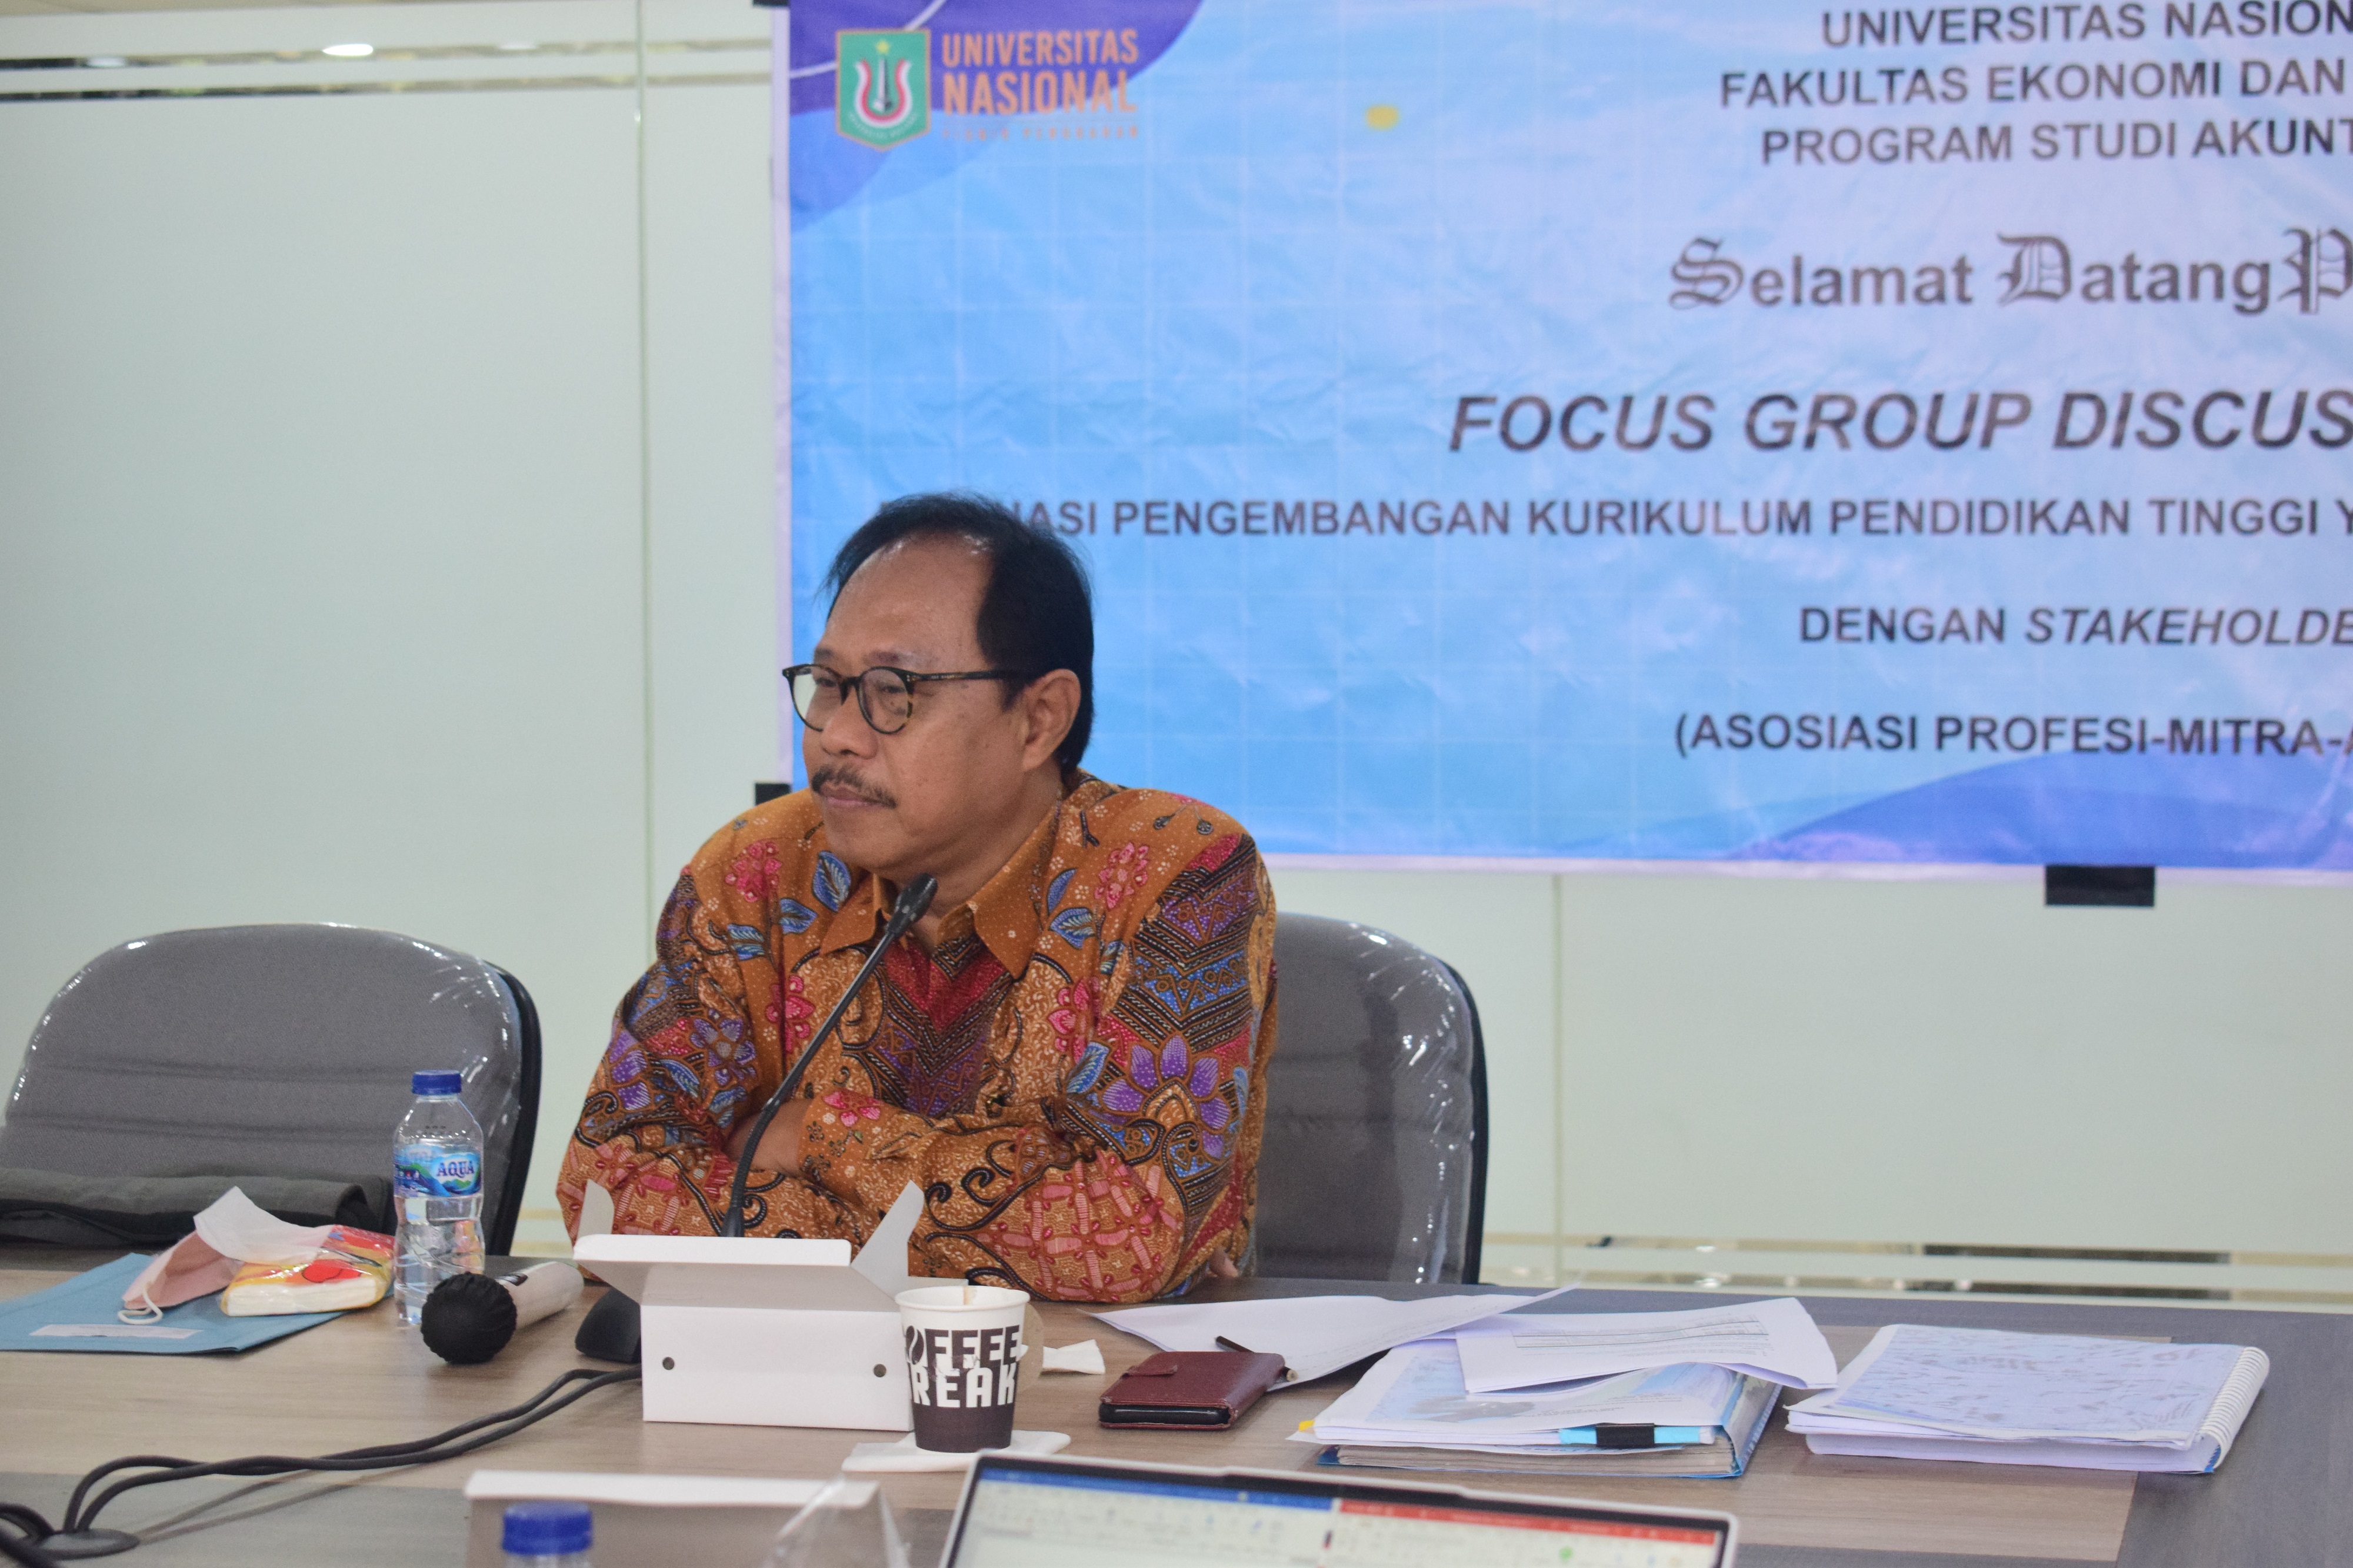 Ketua-Prodi-Akuntansi-FEB-Dr.-Bambang-Subiyanto-S.E.-M.Ak-CPA-Dalam-Sambutan